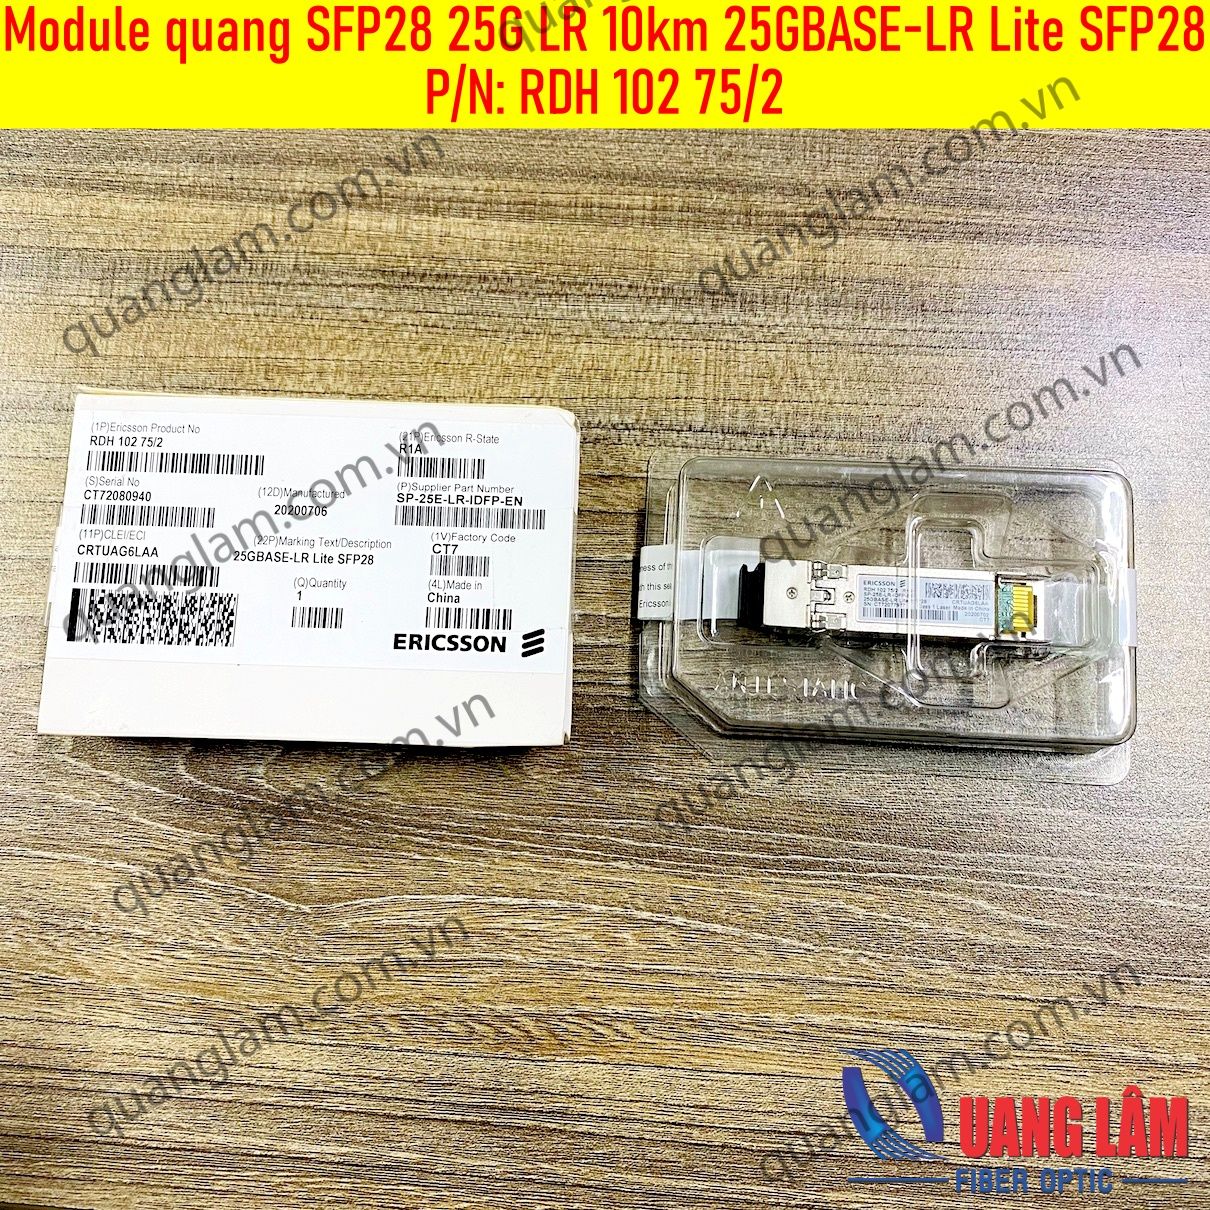 Module quang SFP28 25G LR 2km 25GBASE-LR Lite SFP28 P/N: RDH 102 75/2